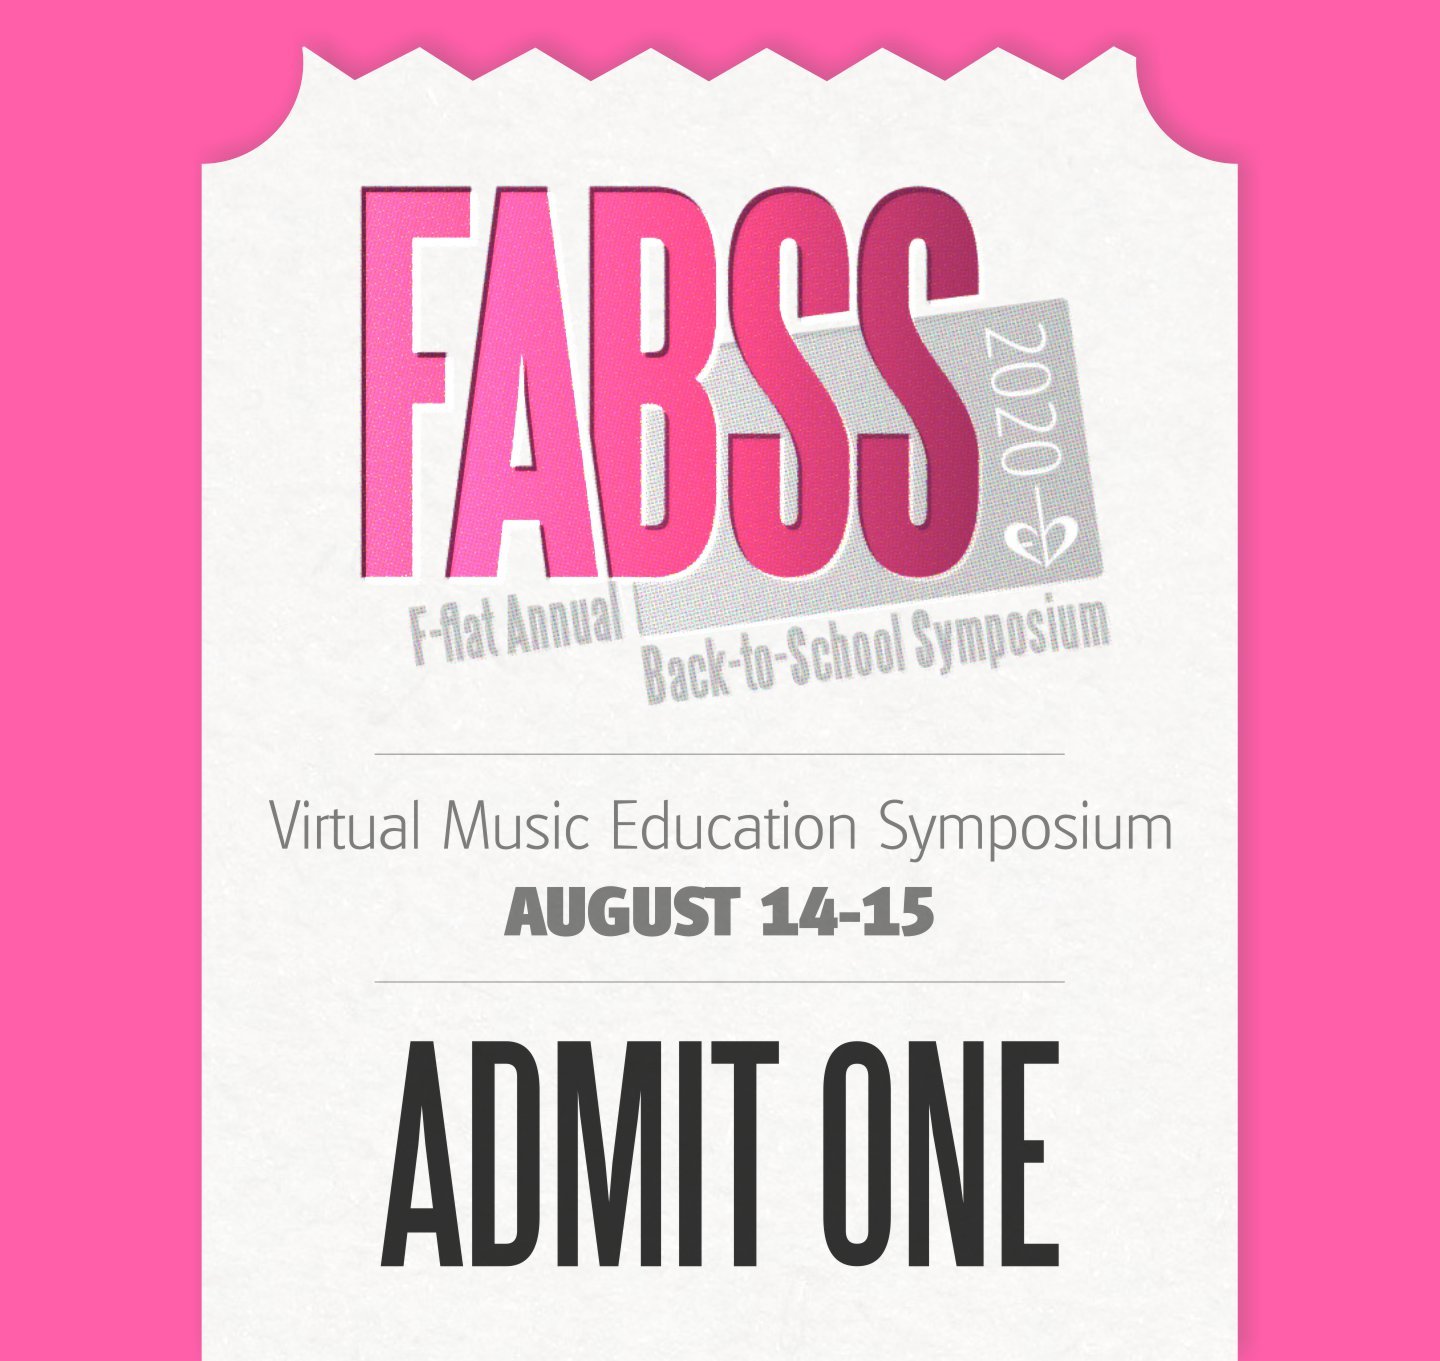 F-flat Annual back-to-shool Summer Symposium